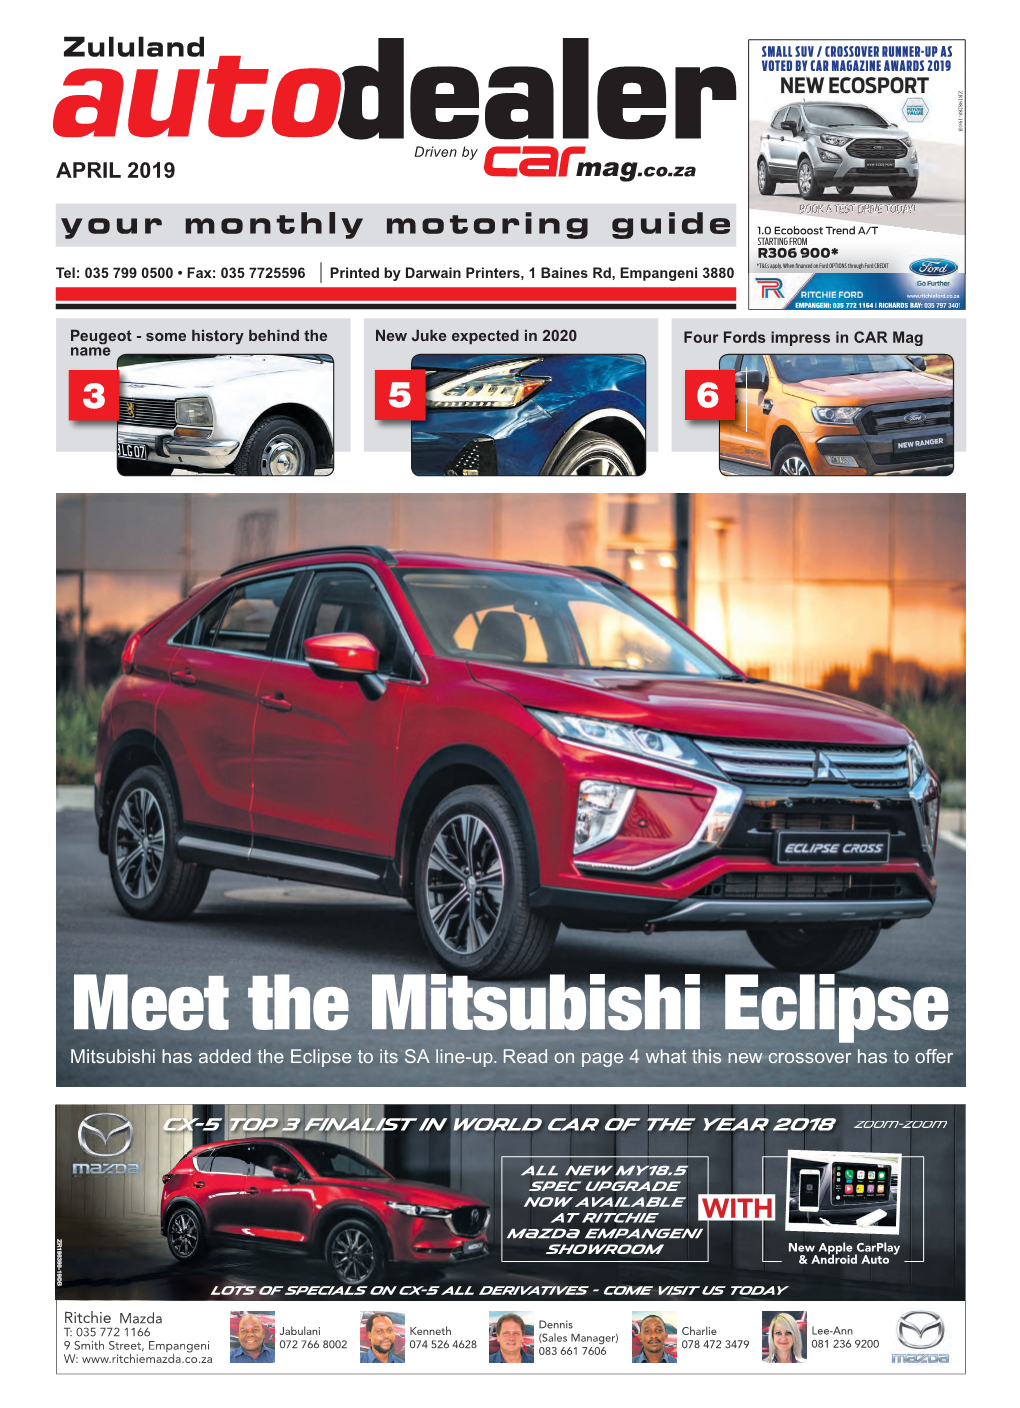 Meet the Mitsubishi Eclipse Mitsubishi Has Added the Eclipse to Its SA Line-Up